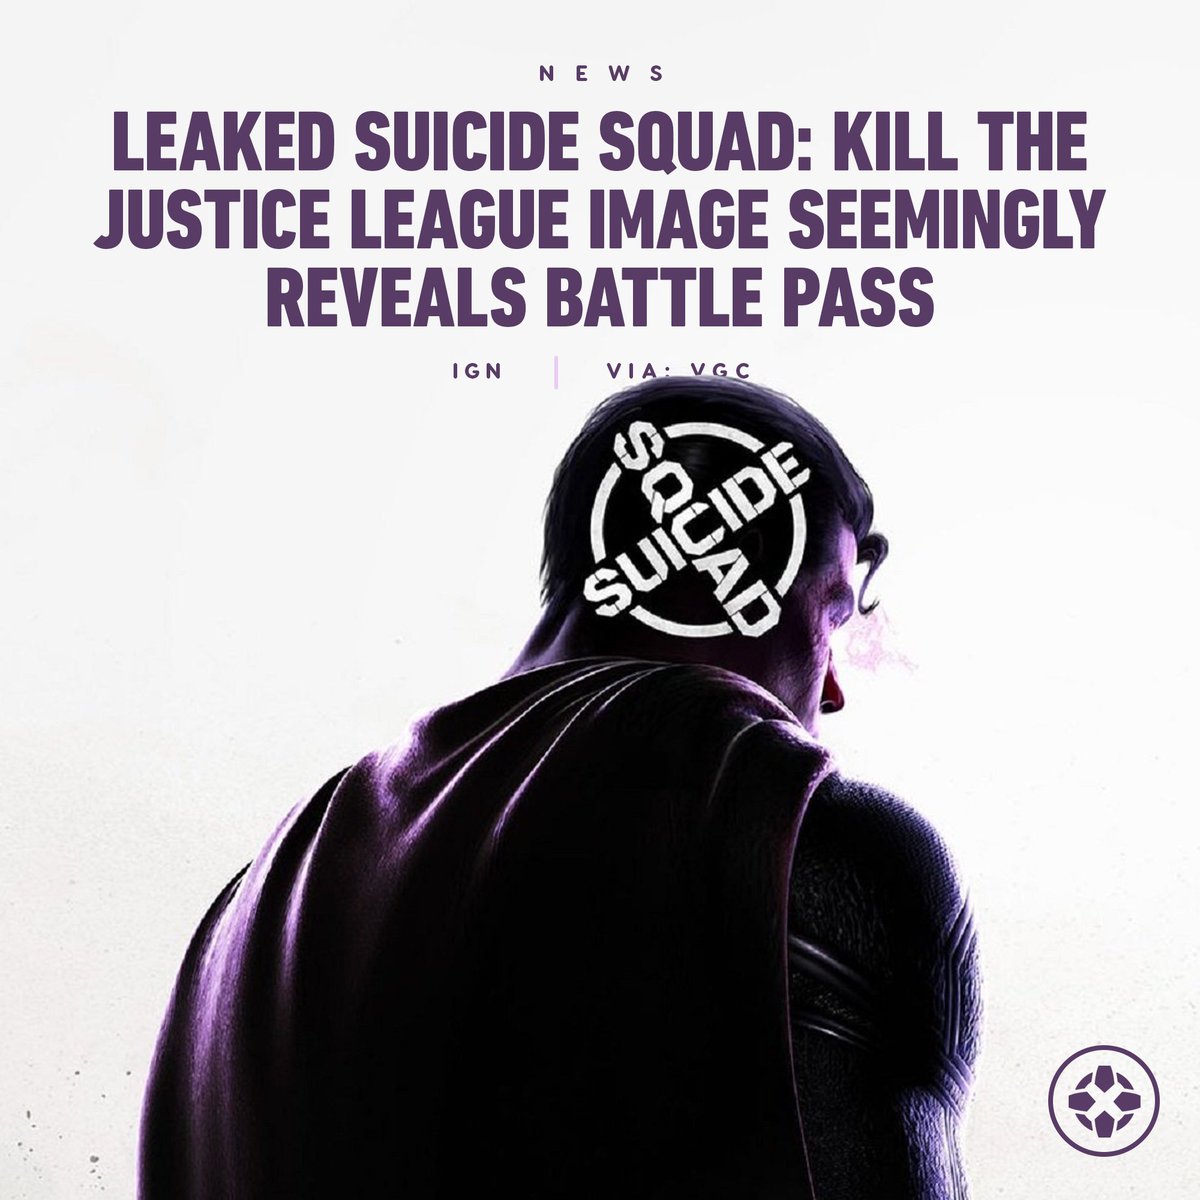 Suicide Squad: Kill The Justice League - IGN